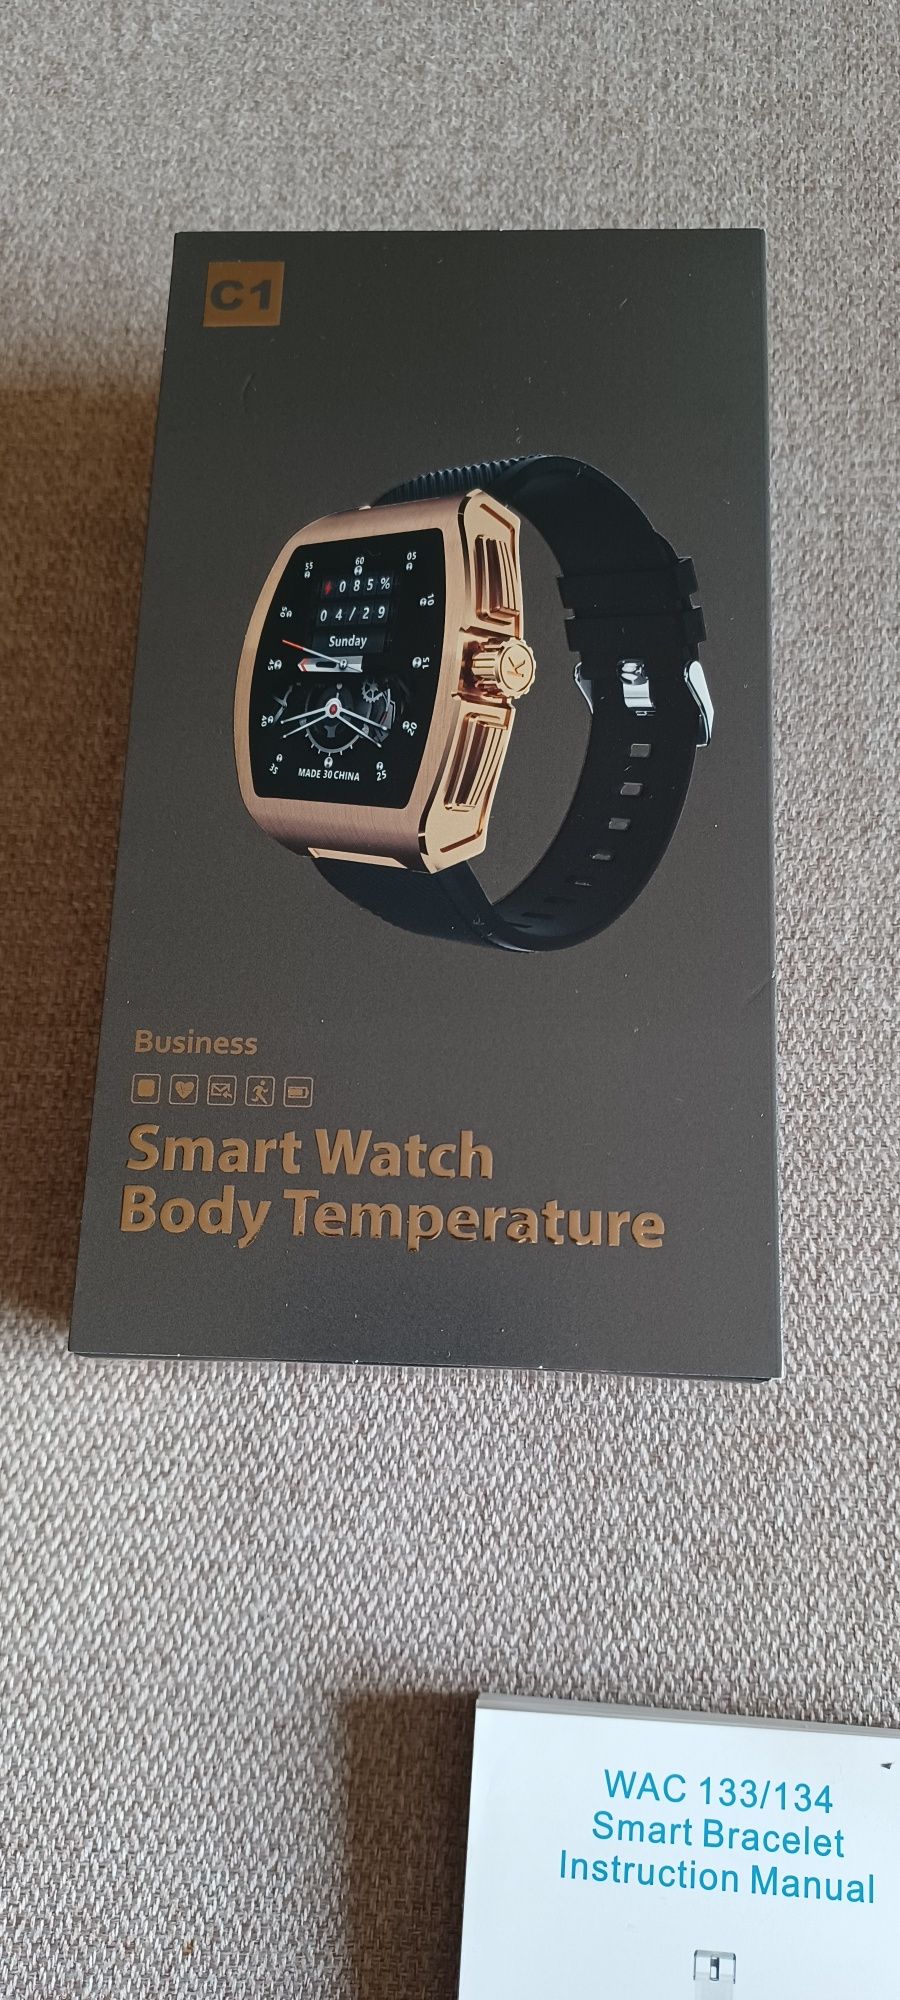 Smart Watch WAC 133/134